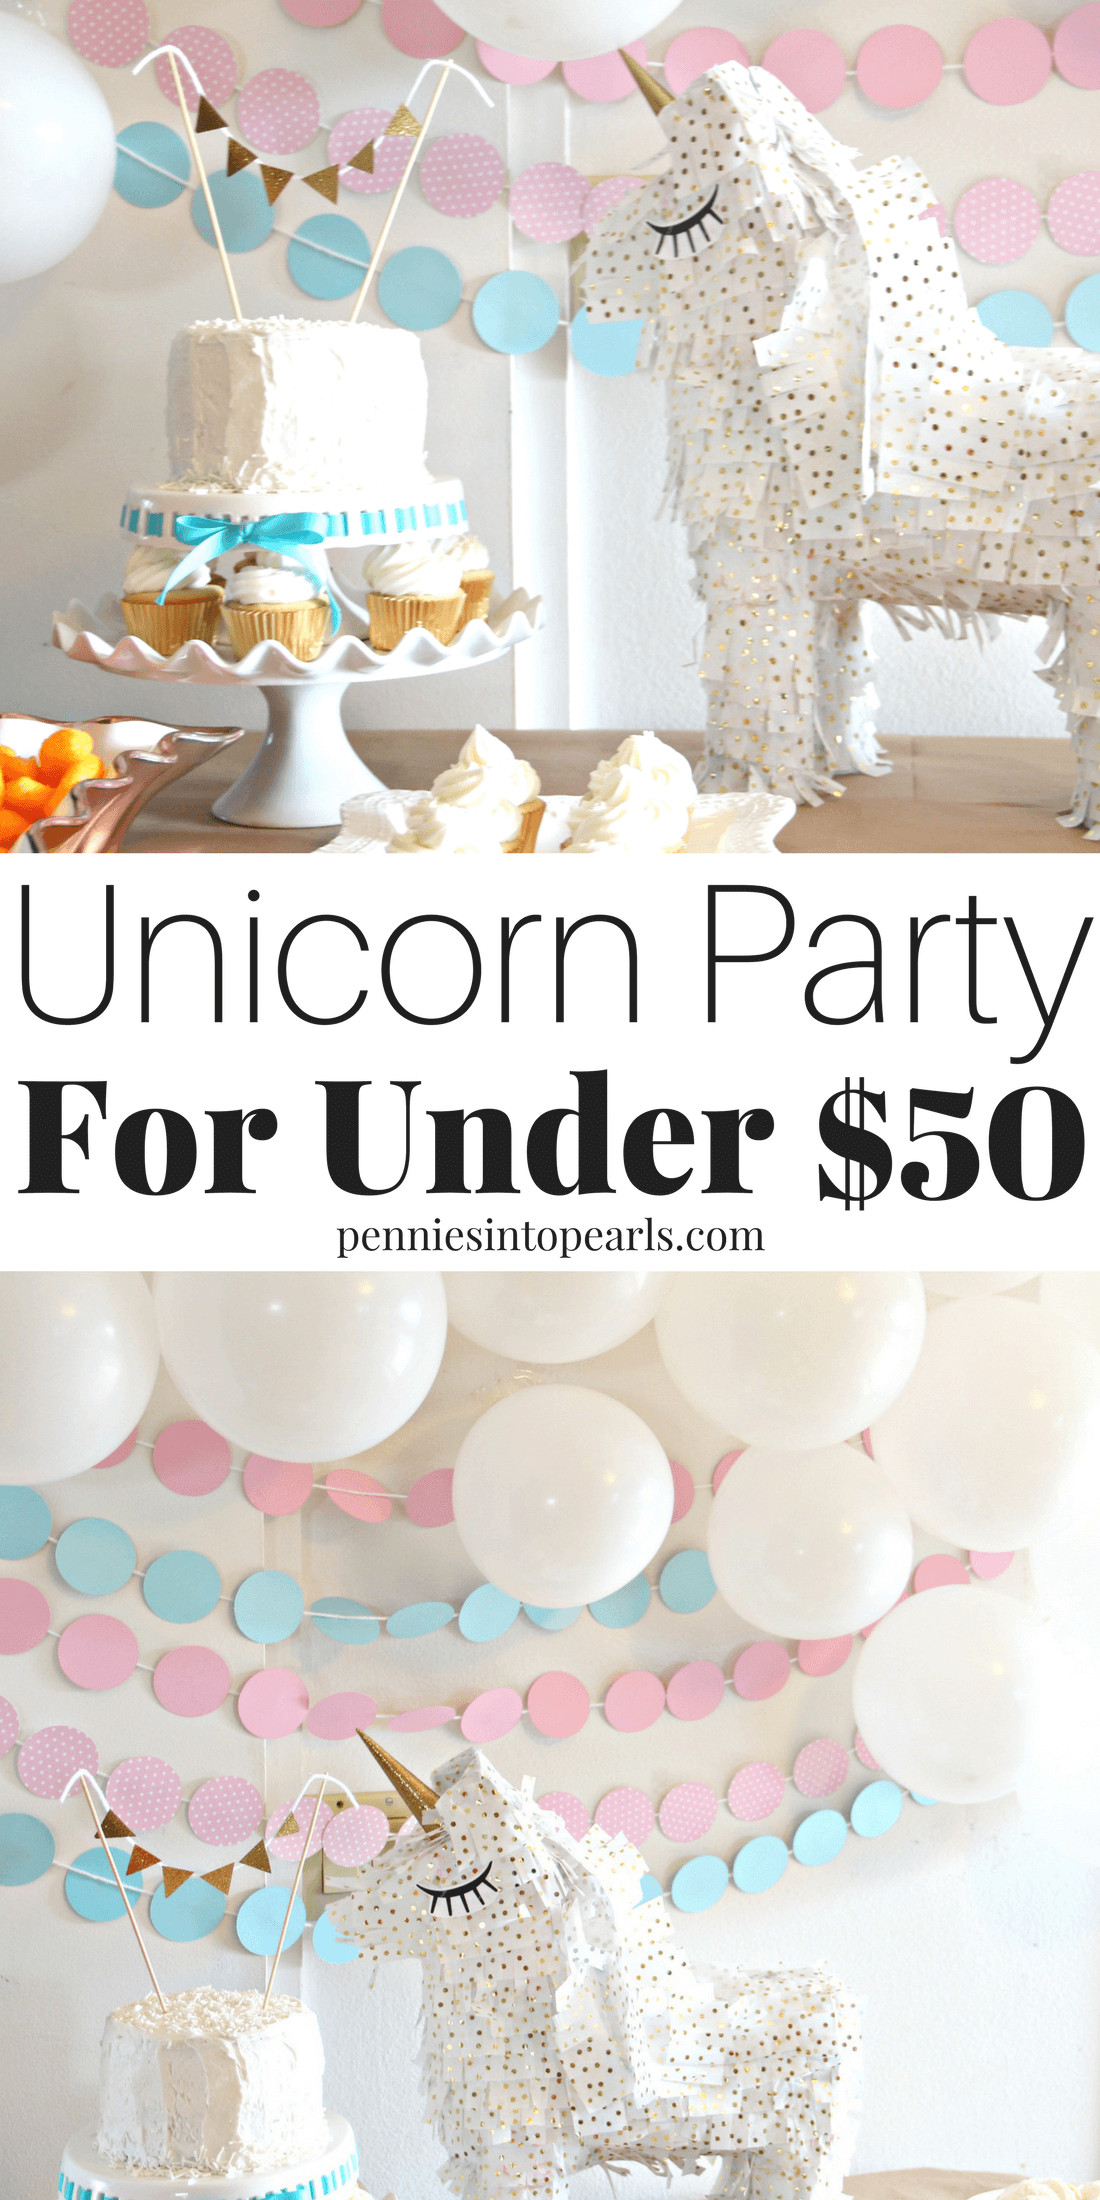 Unicorn Bday Party Ideas
 Unicorn Birthday Party Ideas on a Bud for Under $50